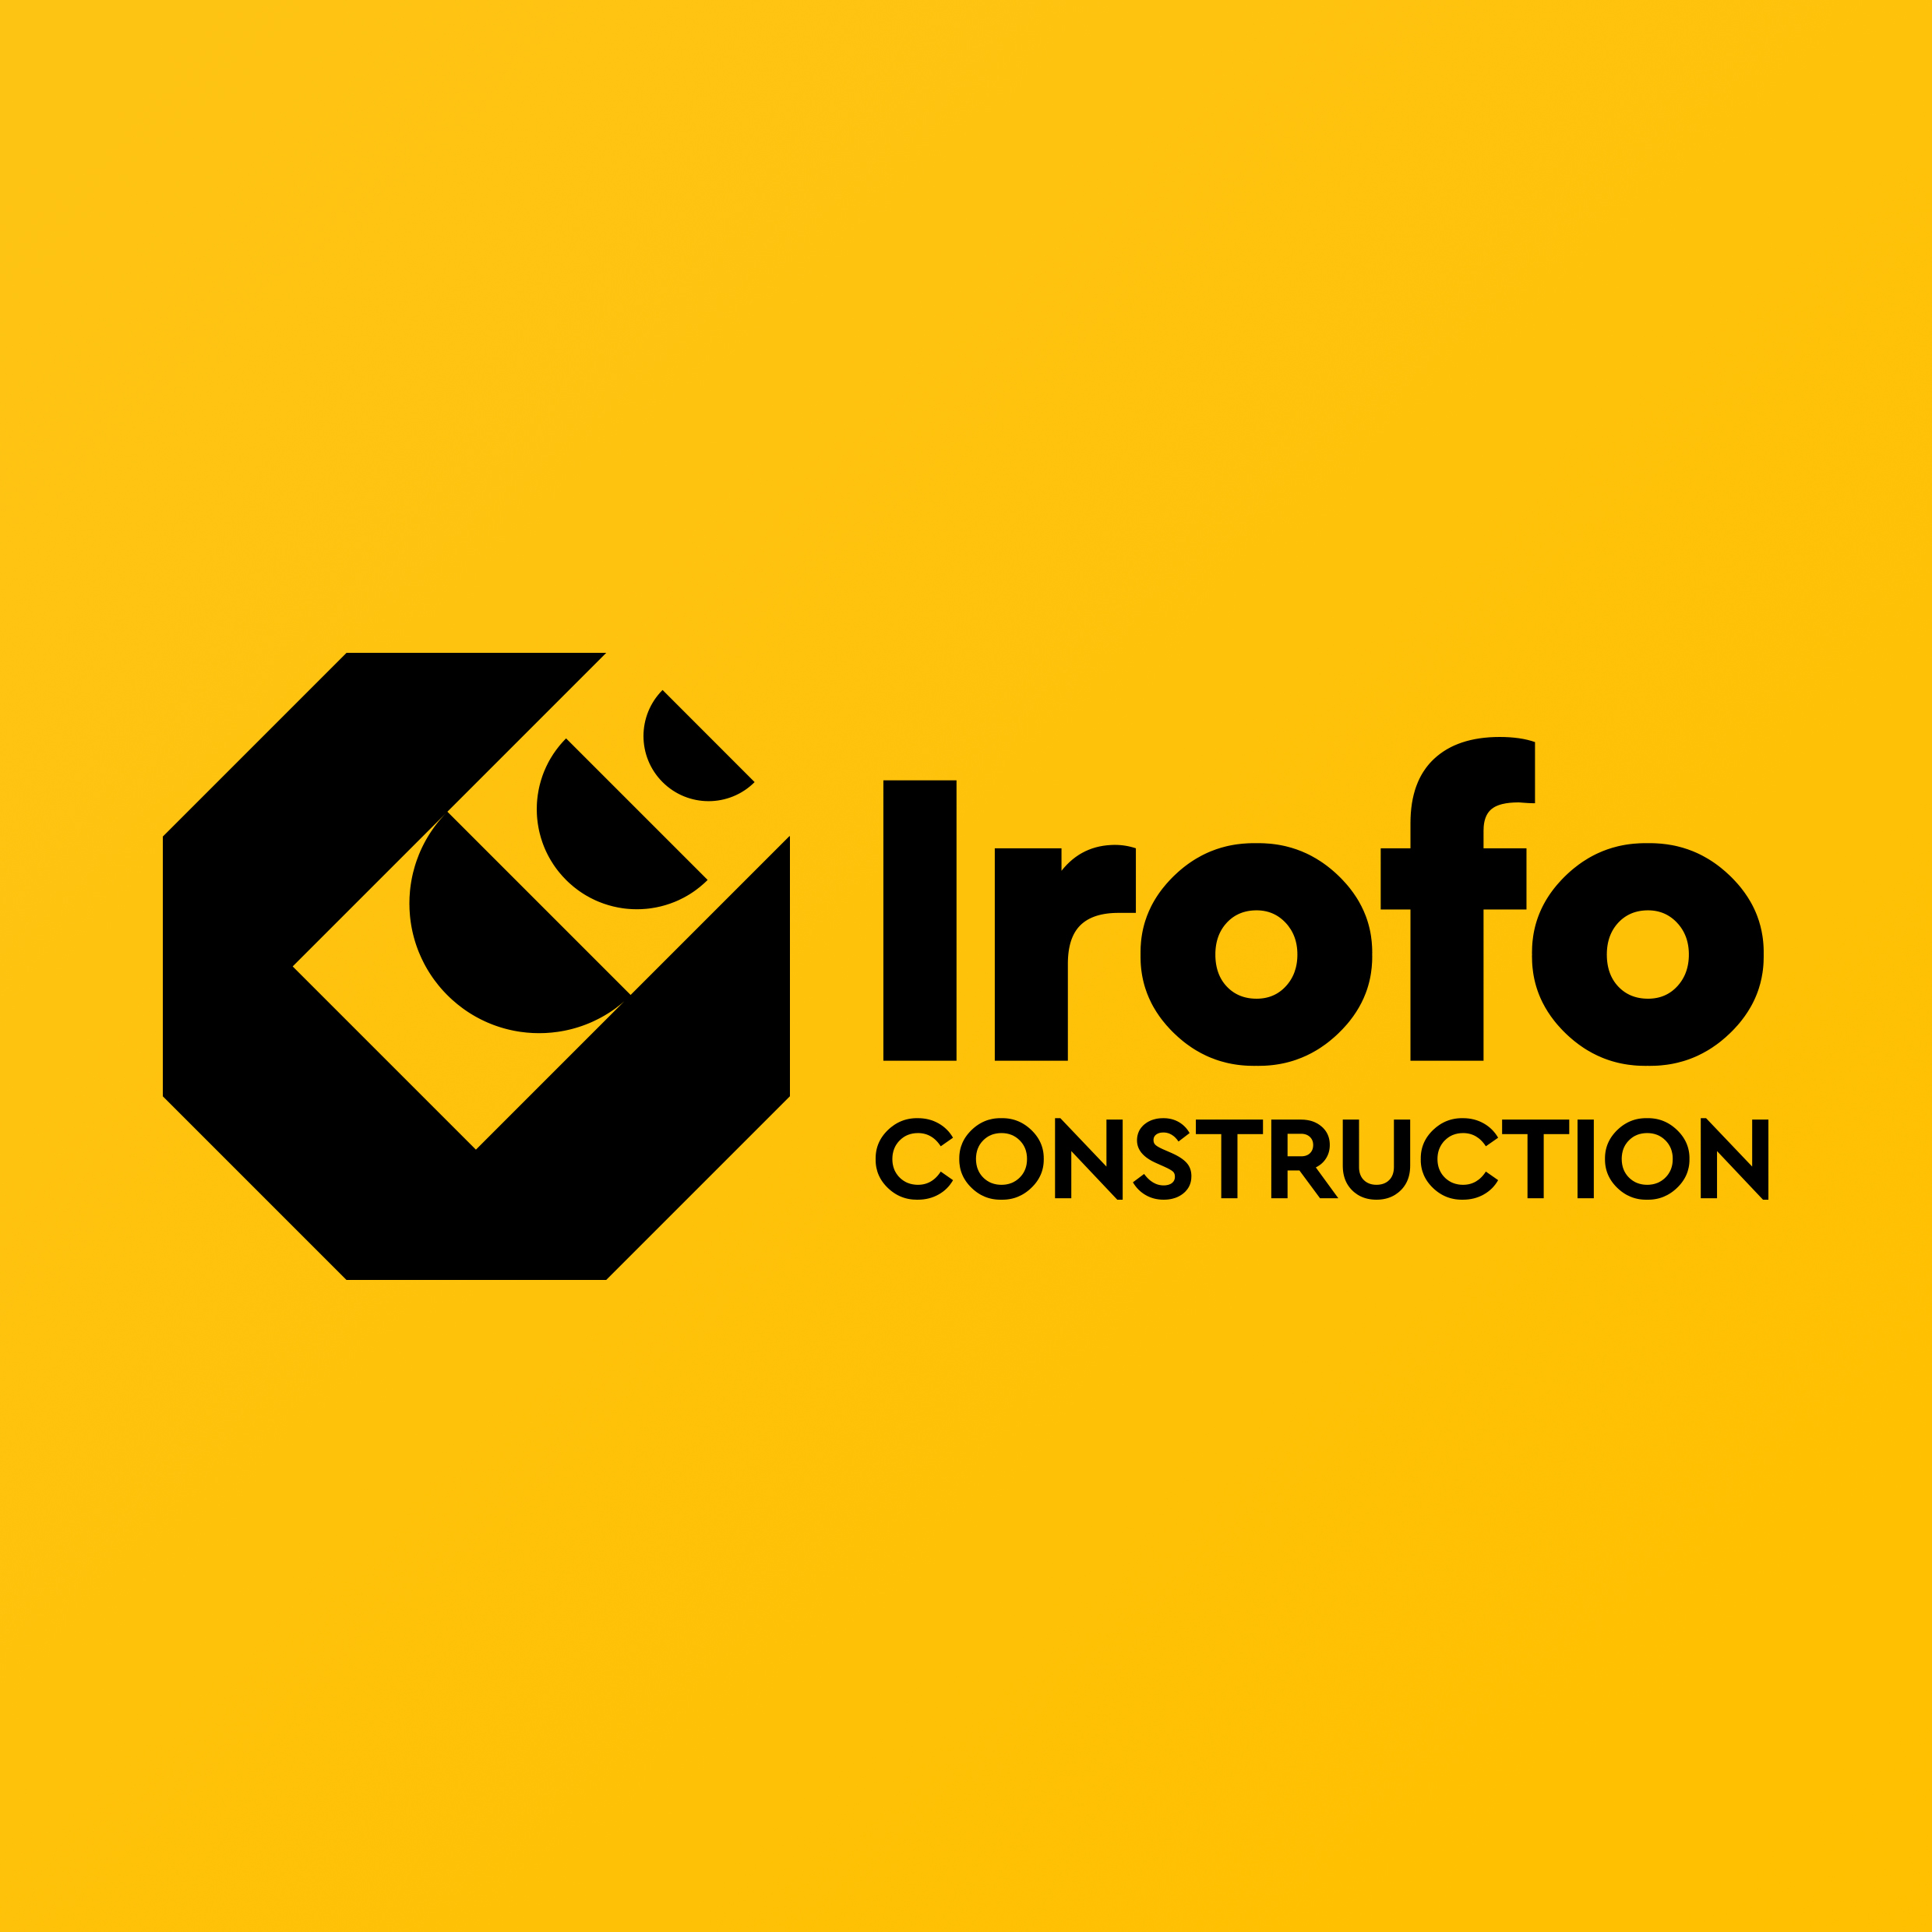 Irofo Construction Website Icons